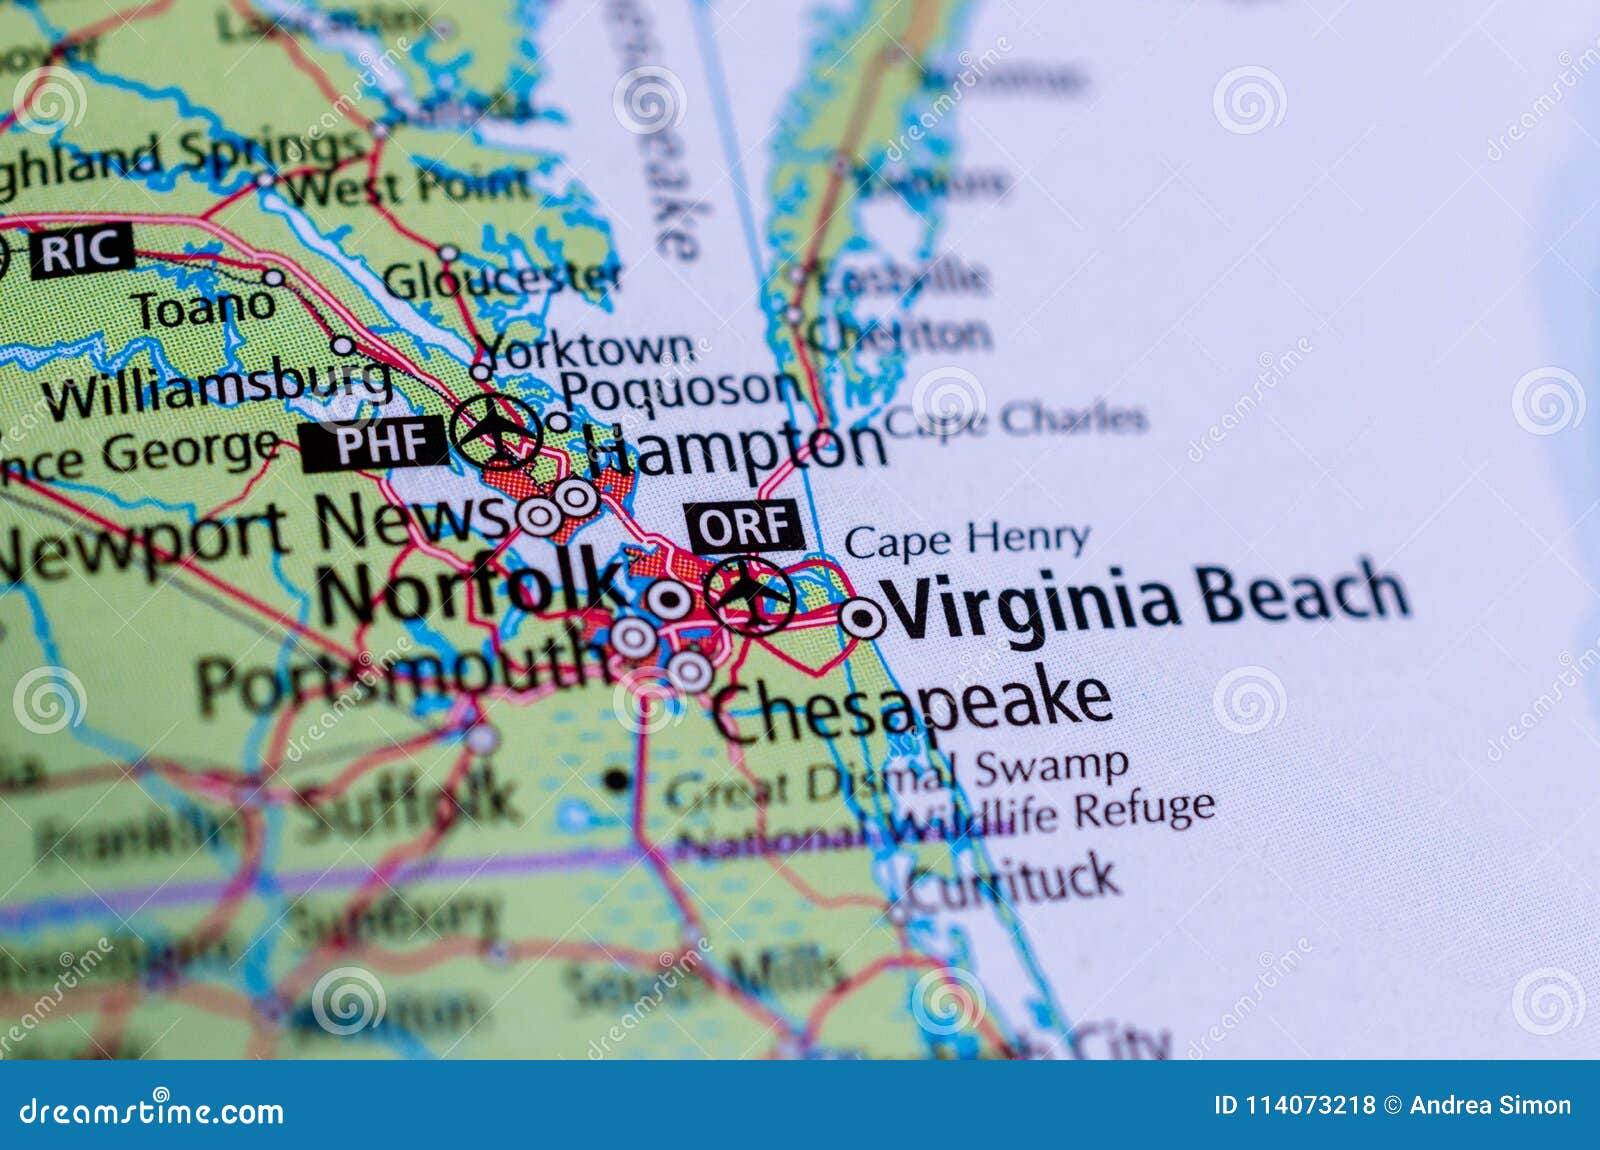 Virginia Beach Virginia On Map Stock Photo Image Of City Region